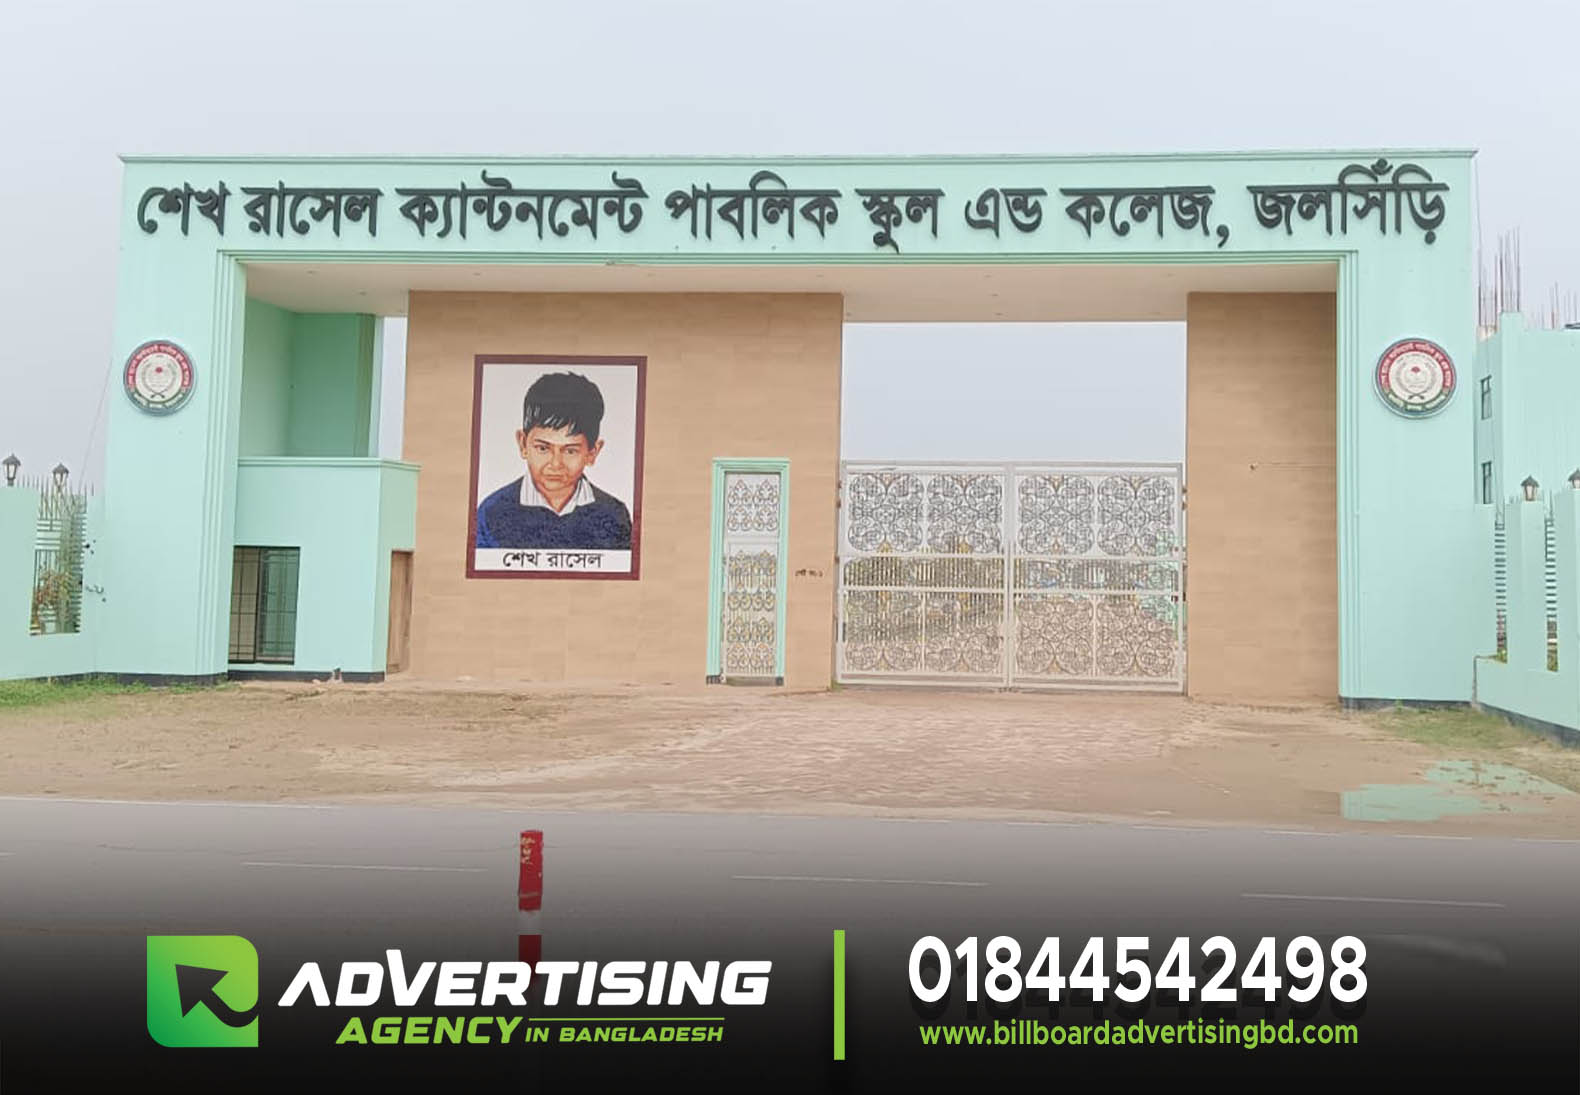 (c) Advertisingagencyinbangladesh.com